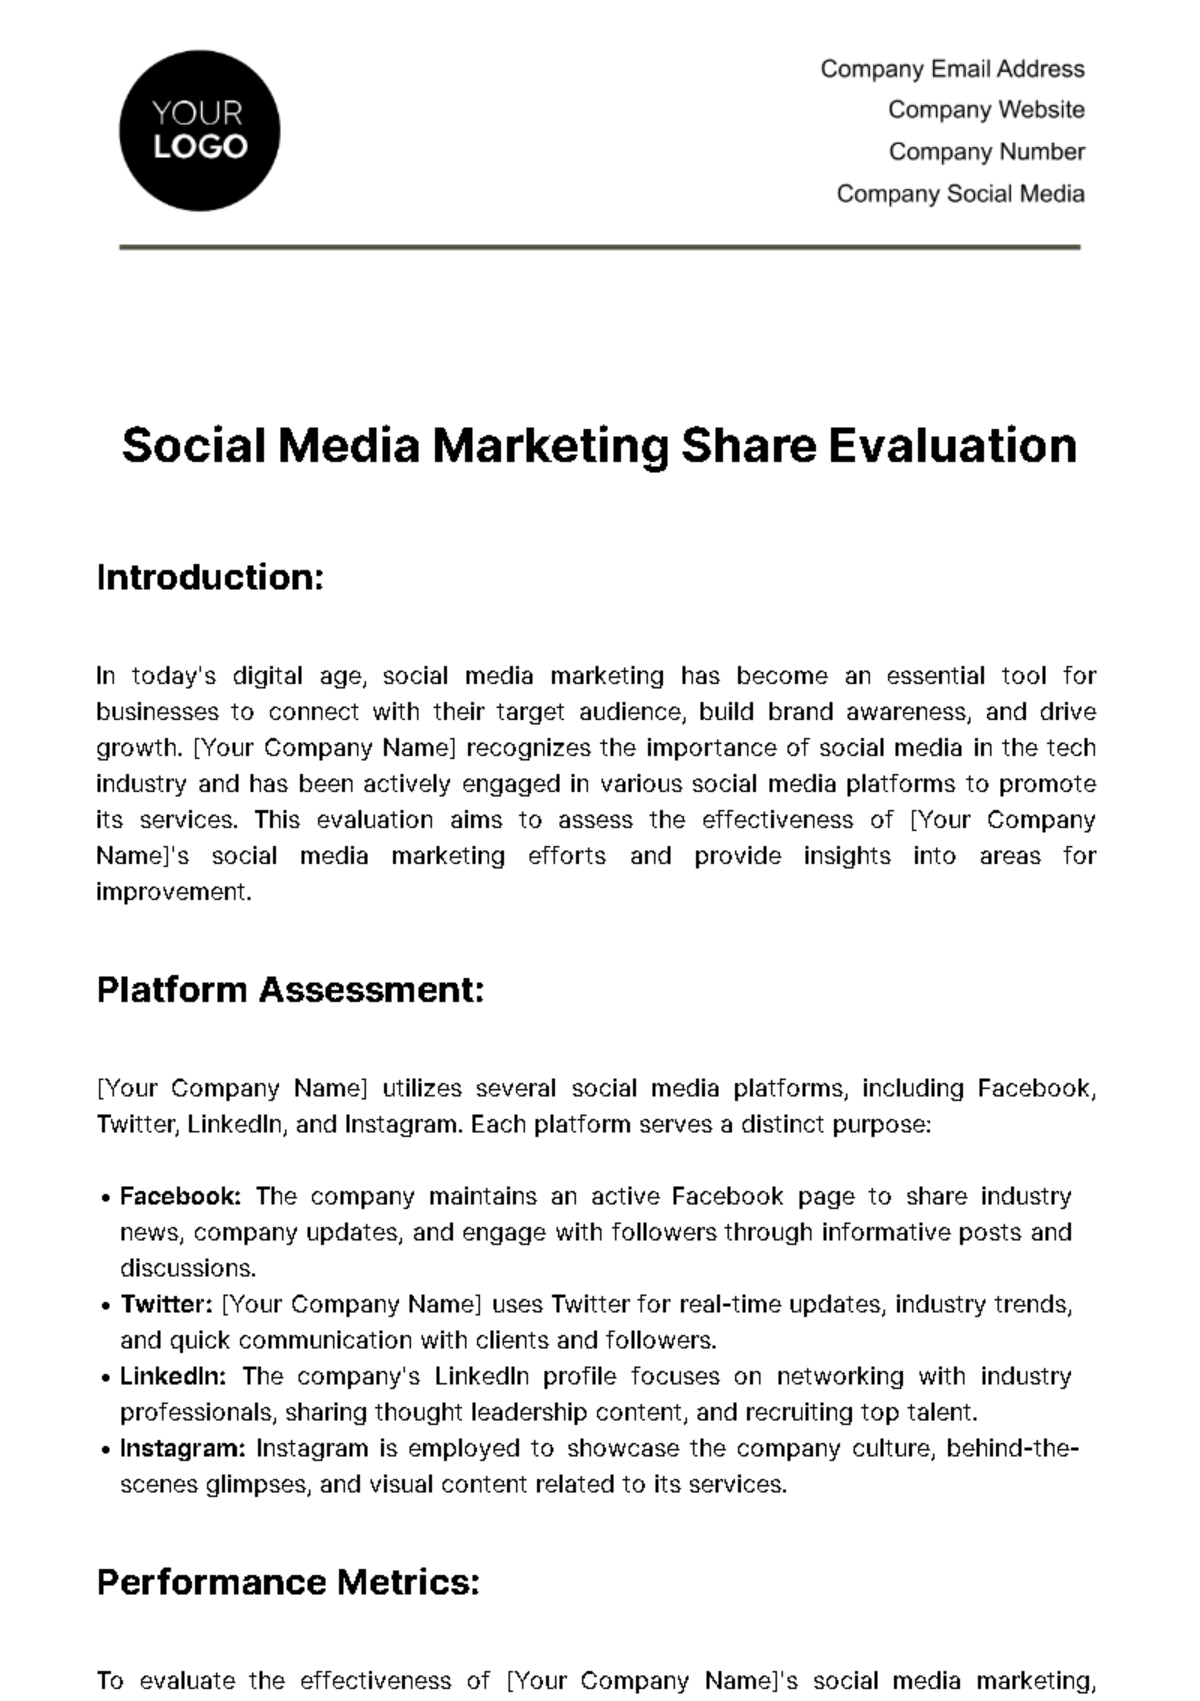 Social Media Marketing Share Evaluation Template